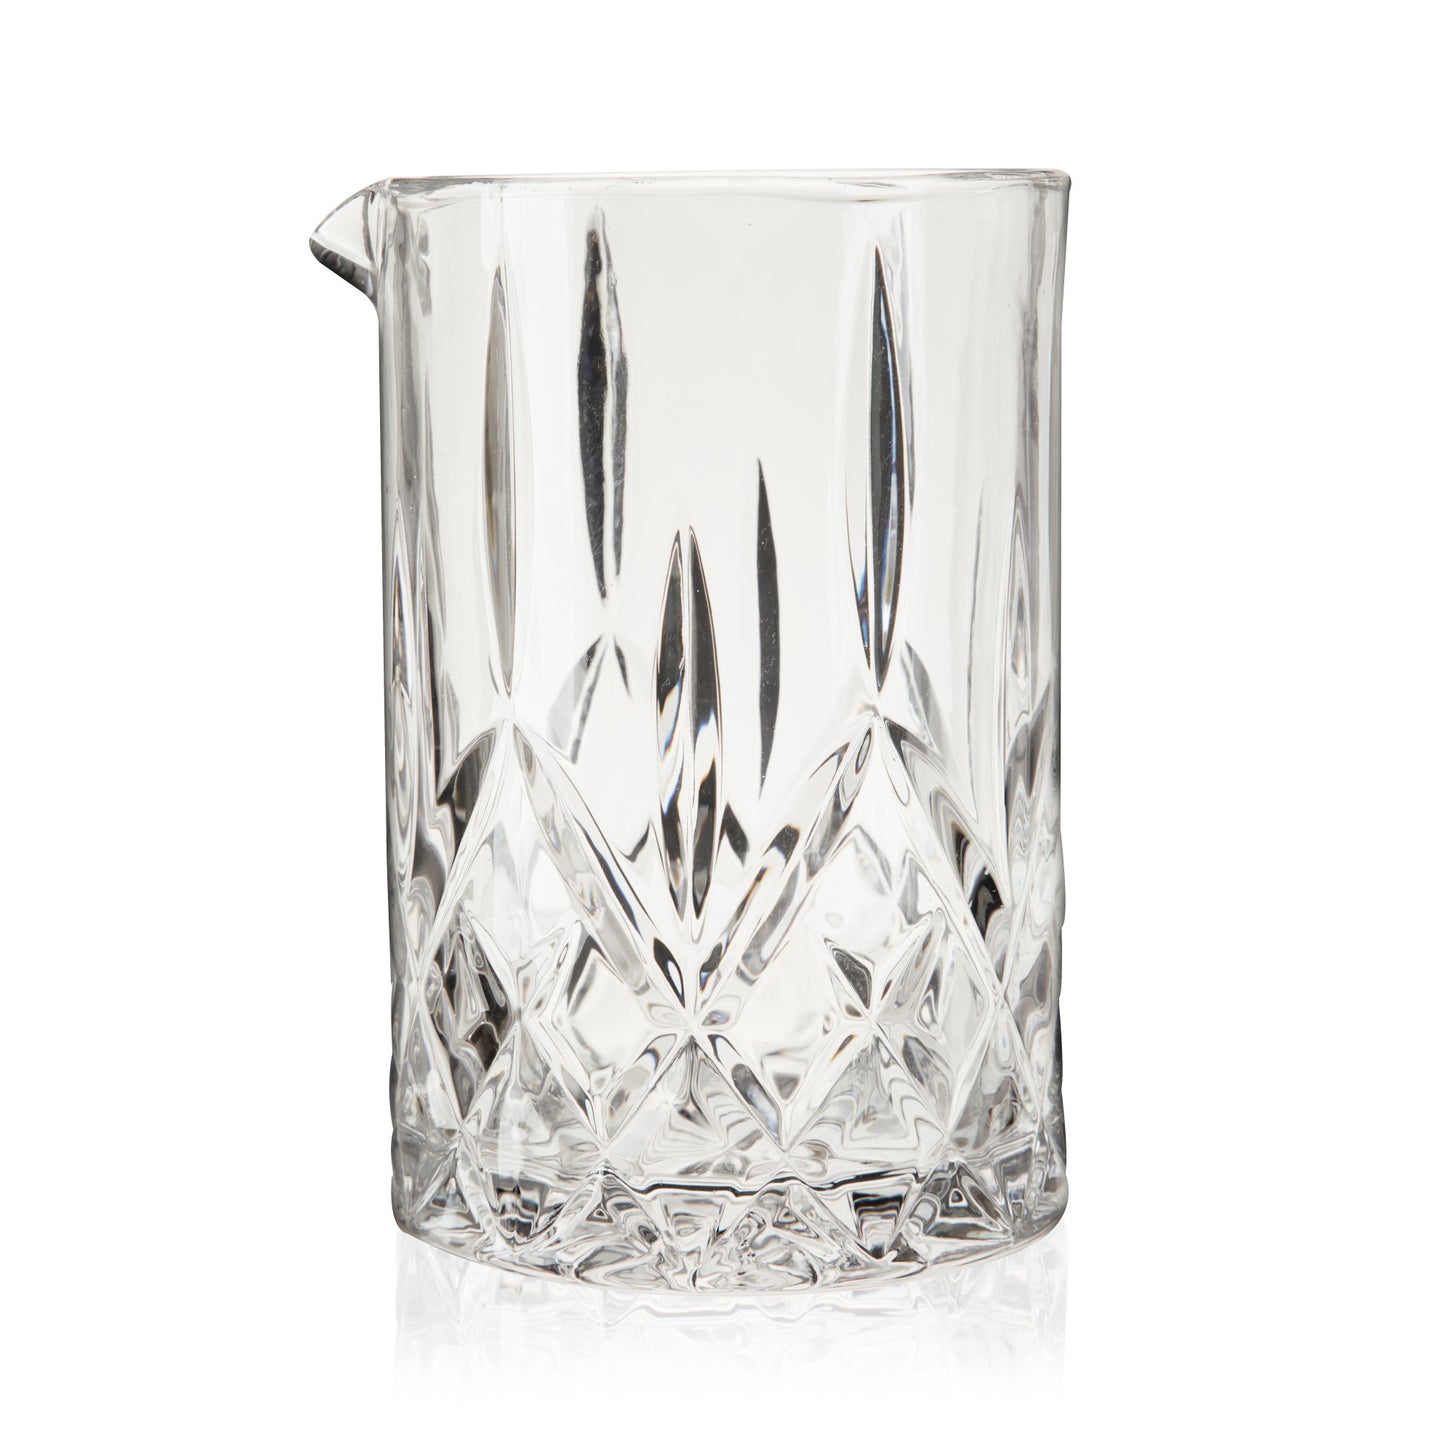 Admiral Crystal Mixing Glass Viski®